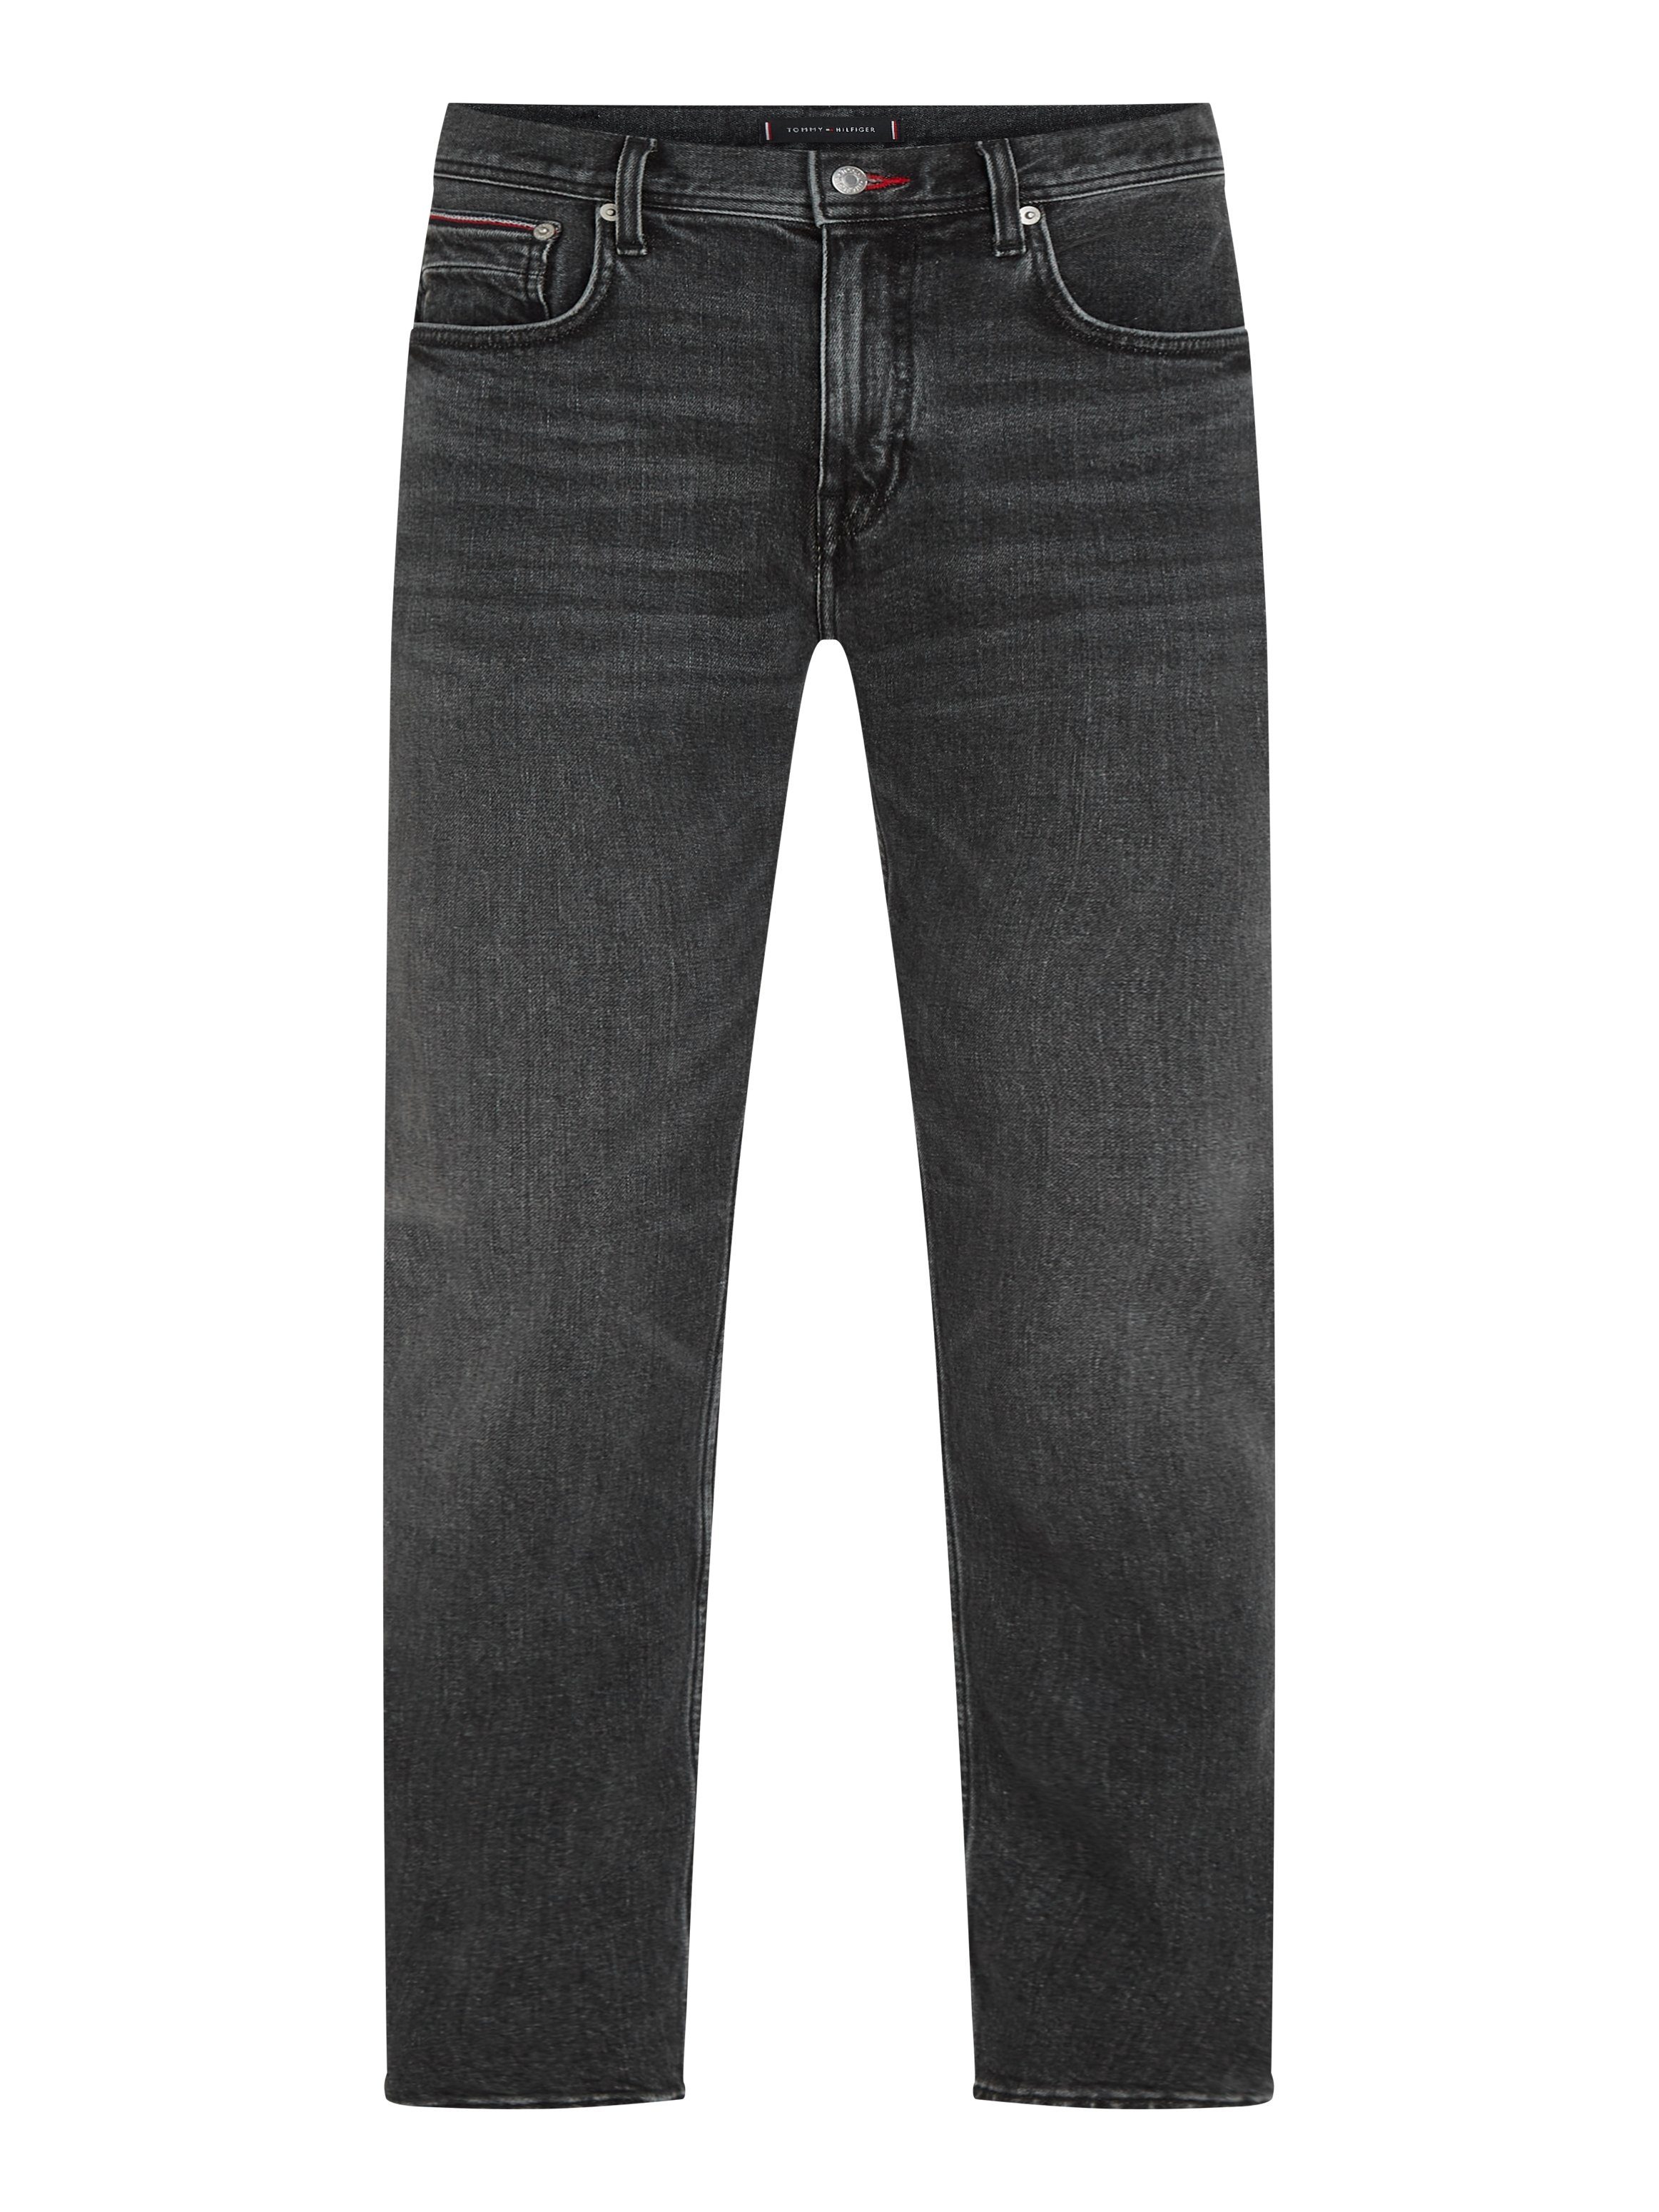 Straight-Jeans STRAIGHT grey Hilfiger STR elgin Tommy DENTON